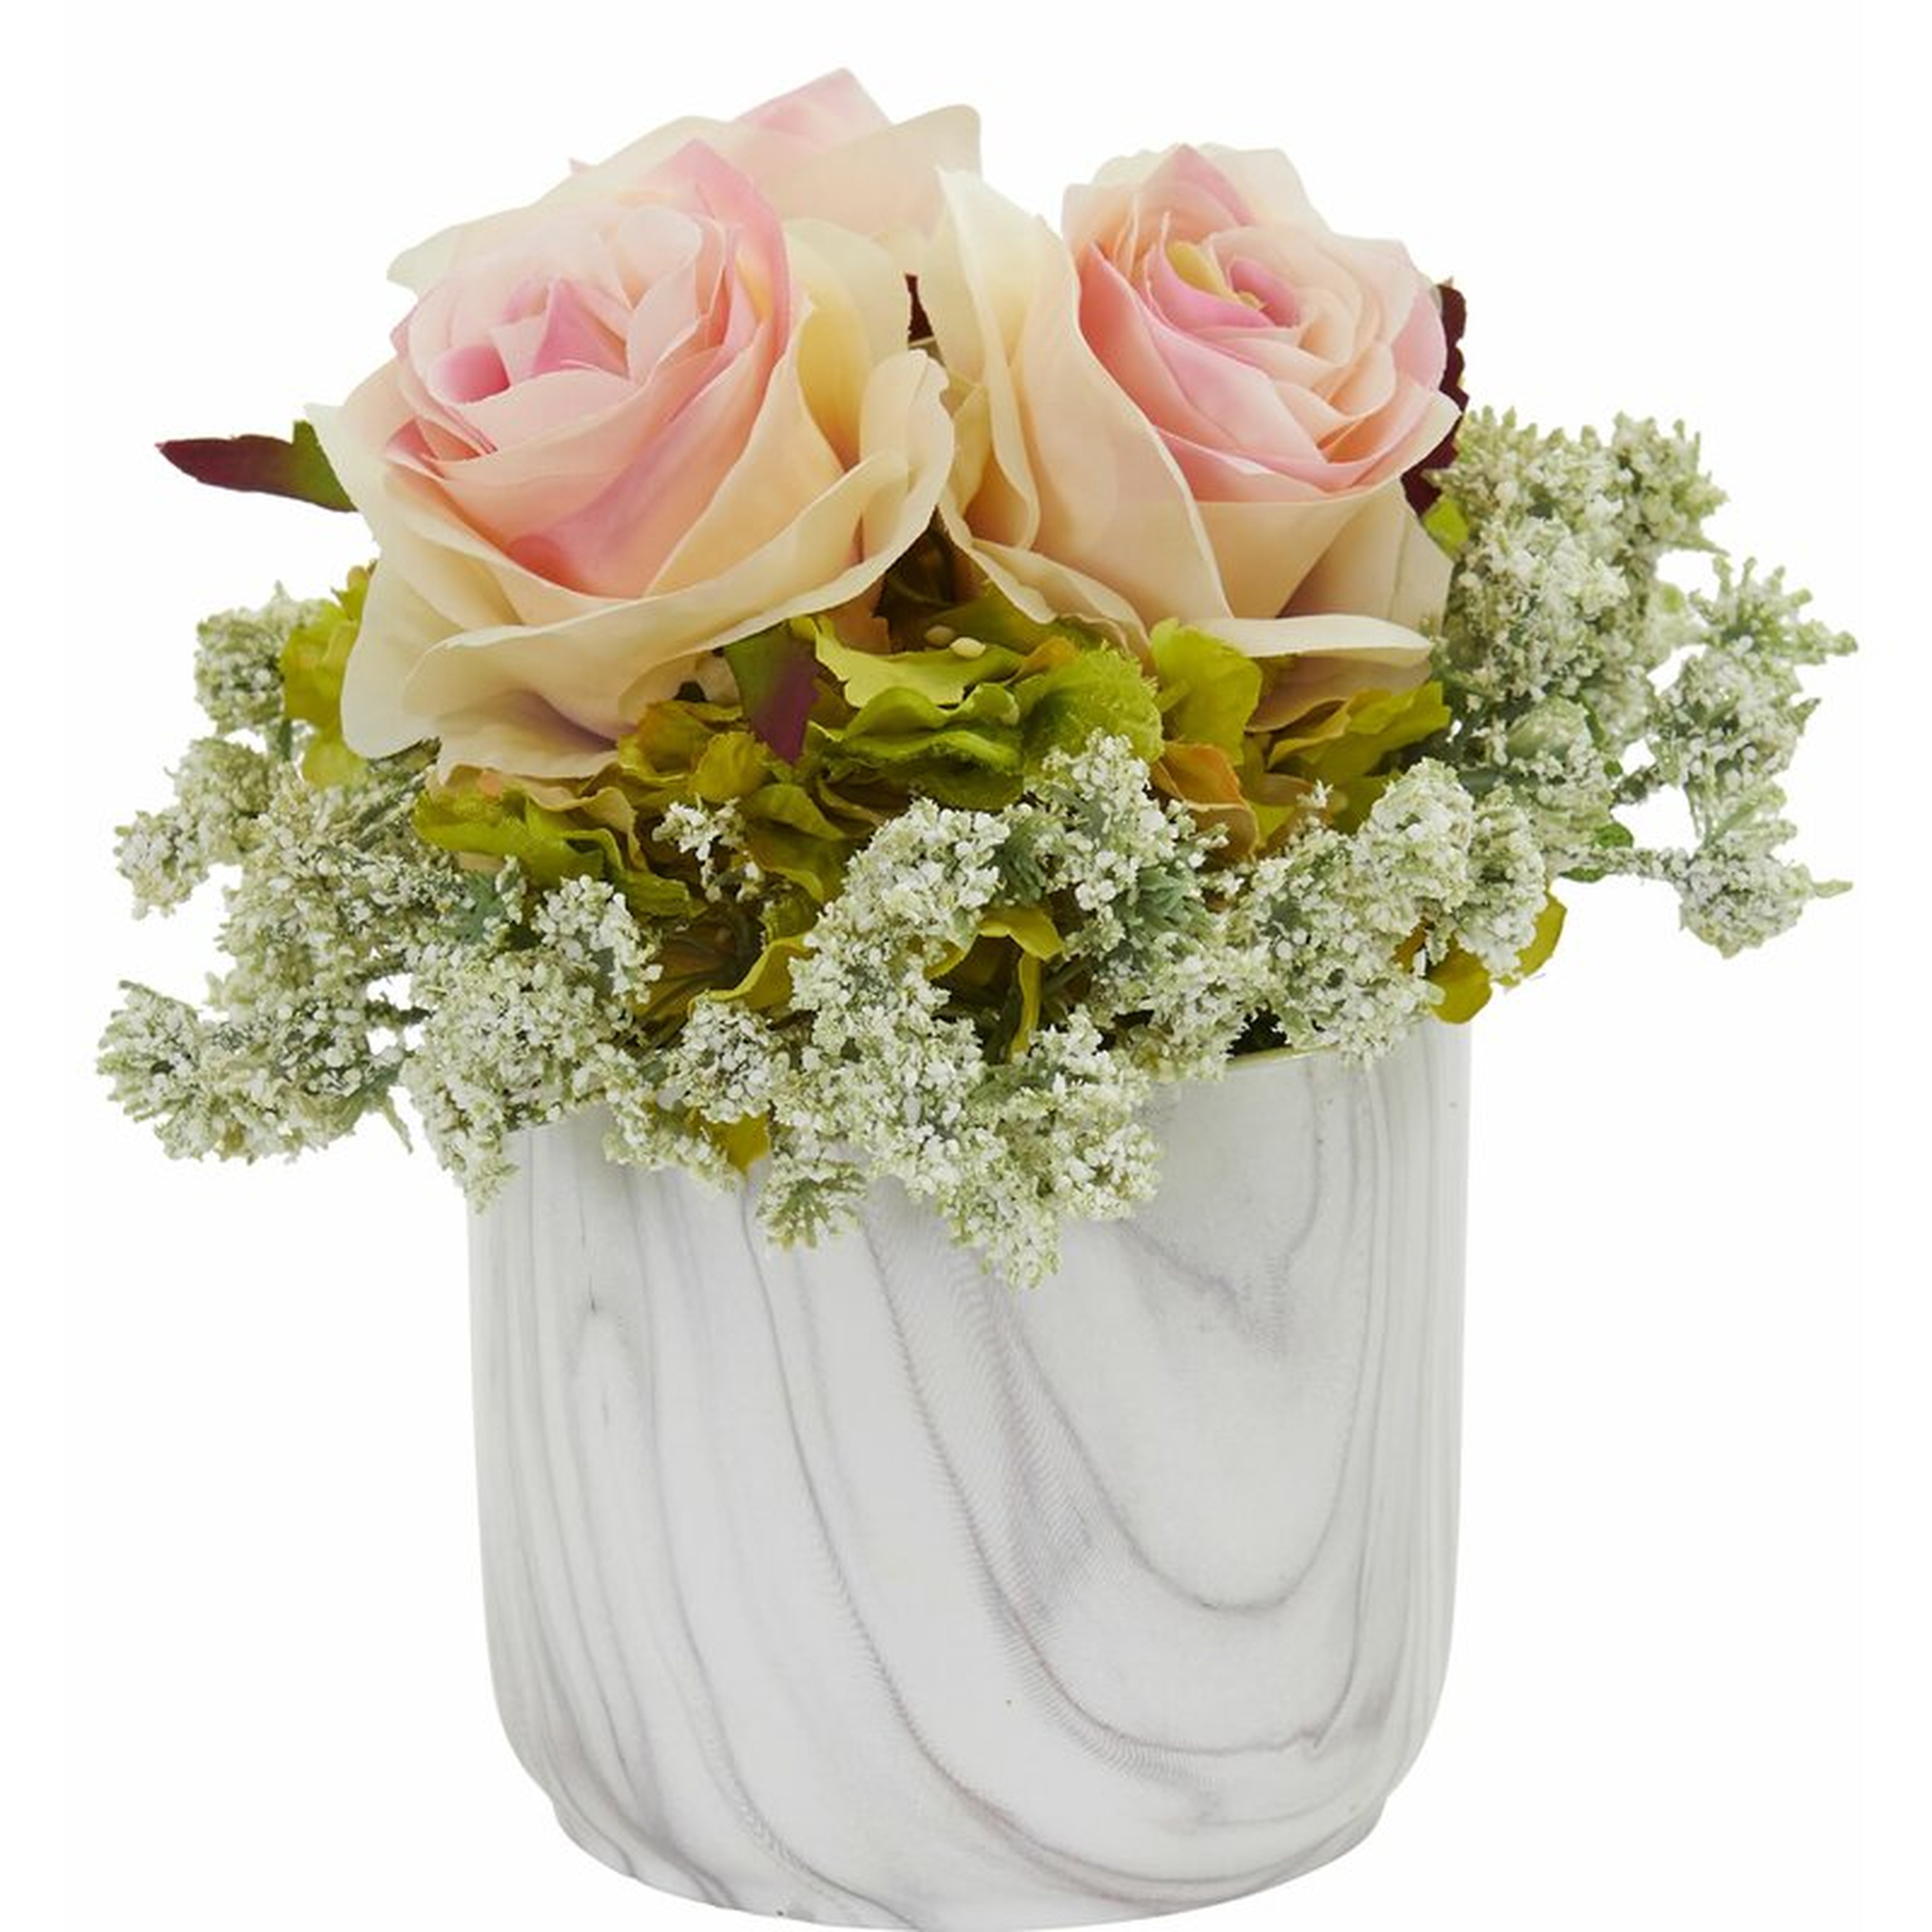 Artificial Rose and Hydrangea Floral Arrangement in Vase - Wayfair